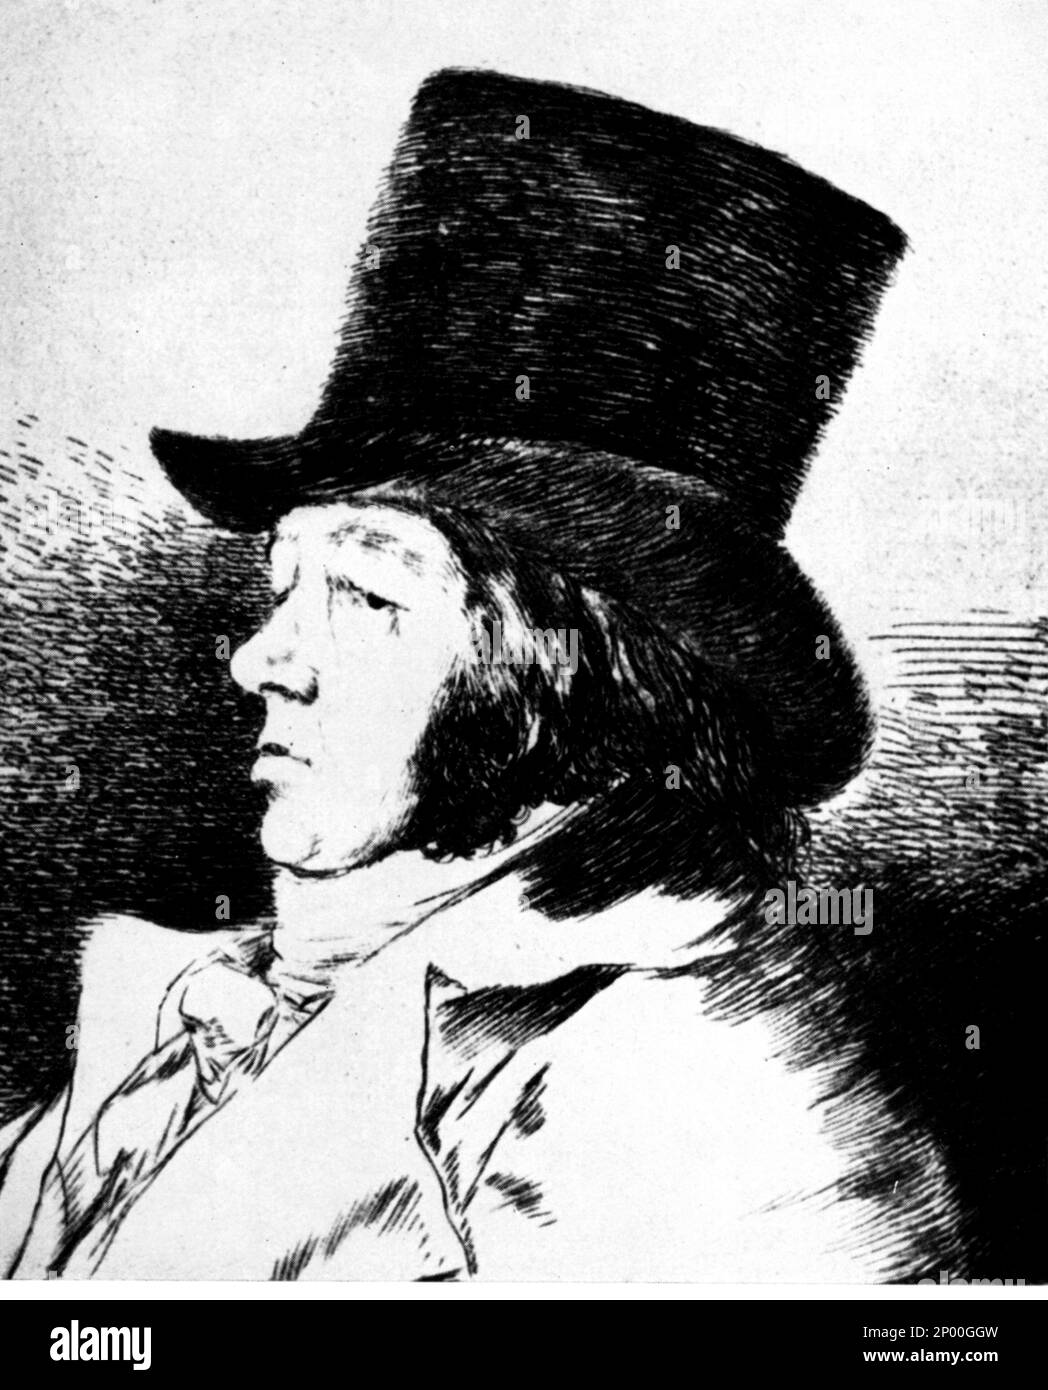 Le peintre espagnol FRANCISCO GOYA y Lucientes ( 1746 - 1828 ) , gravure autoportrait - ARTISTA - profilo - profil - chapeau - cappello - barba - pittore - ARTE - ARTI VISIVE - VISUAL ARTS - incisione --- Archivio GBB Banque D'Images